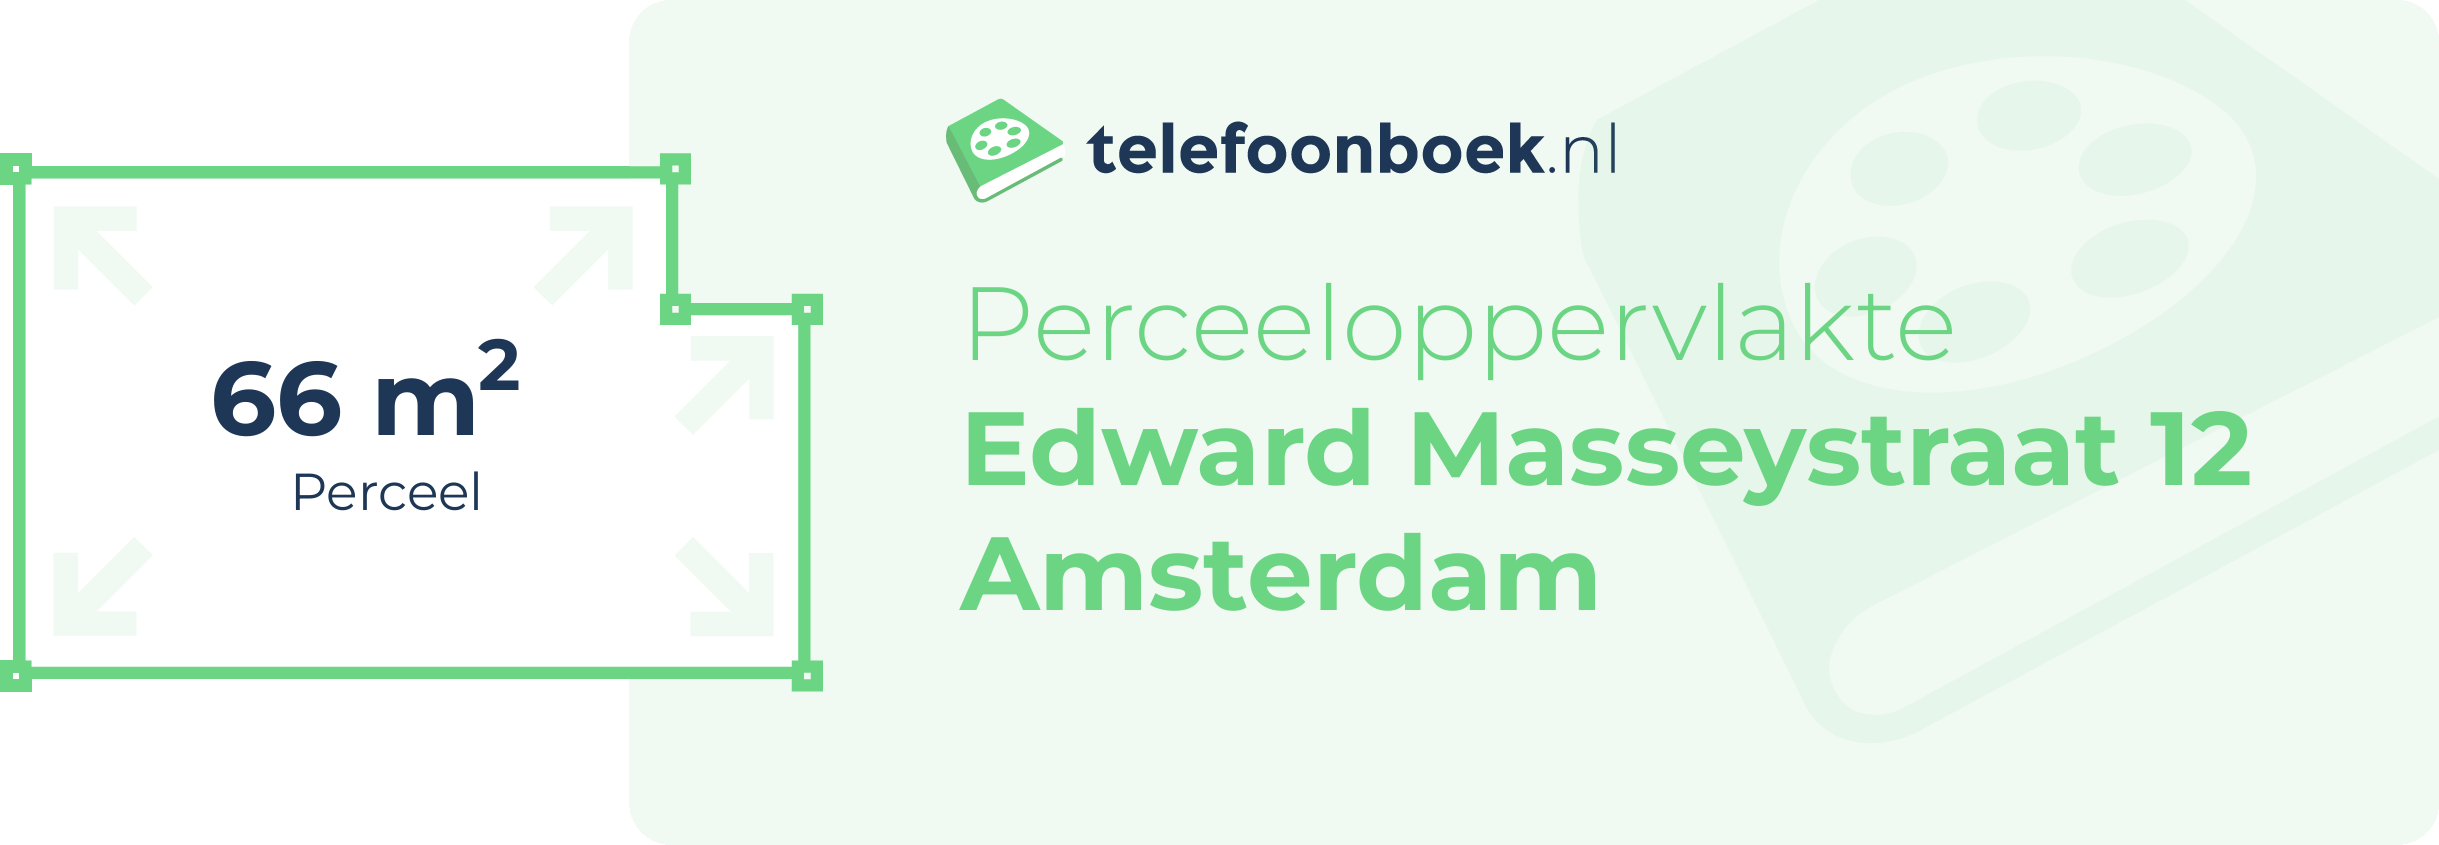 Perceeloppervlakte Edward Masseystraat 12 Amsterdam